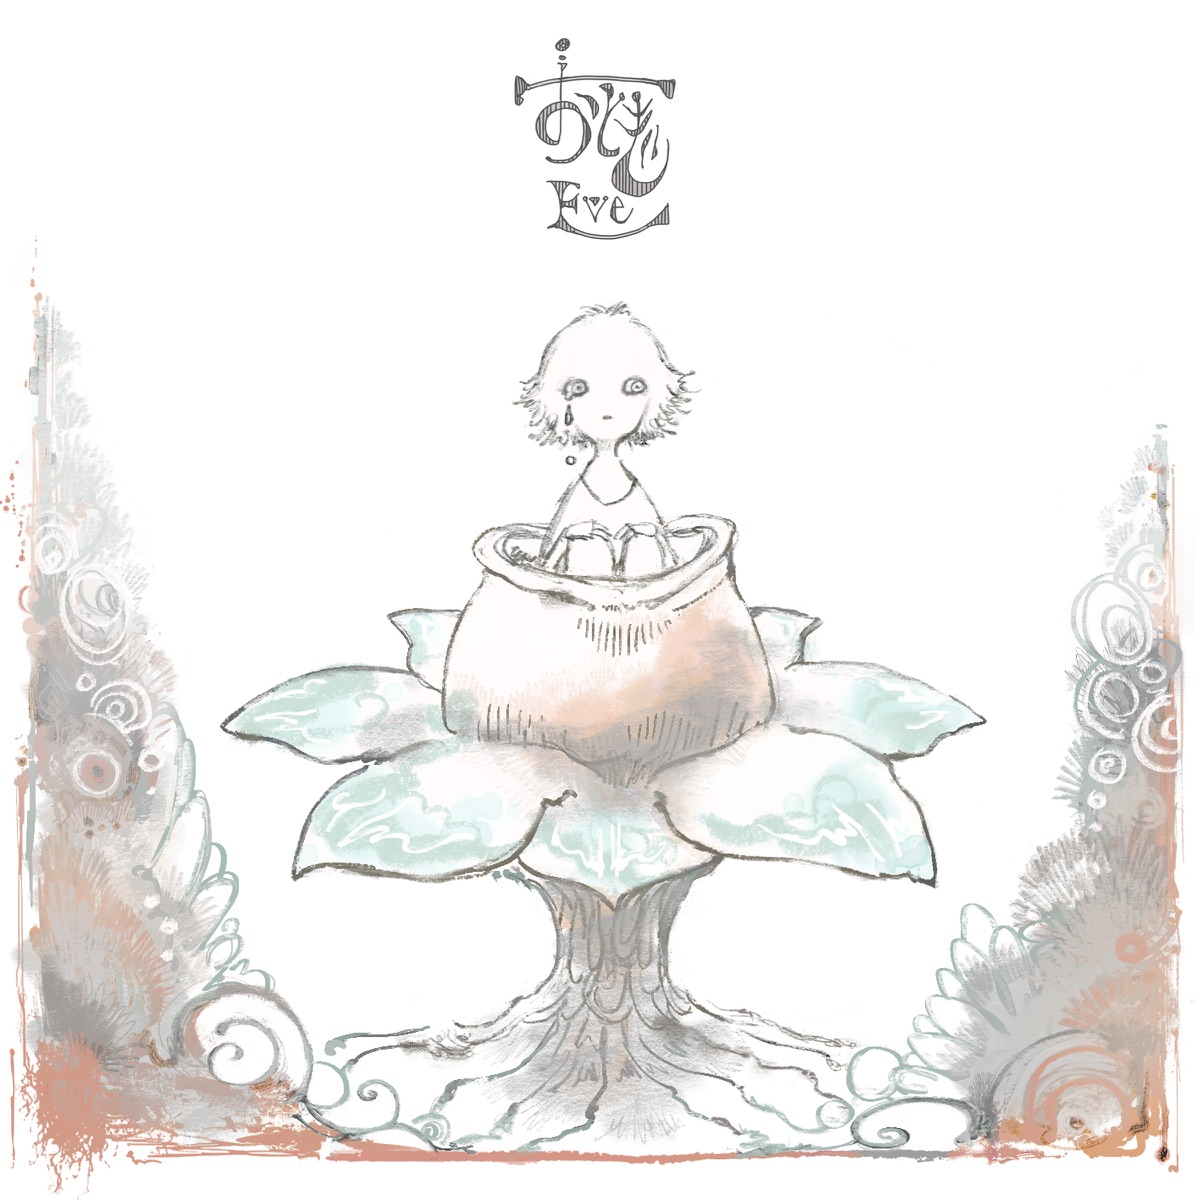 Cover art for『Eve - Yadorigi』from the release『Otogi』